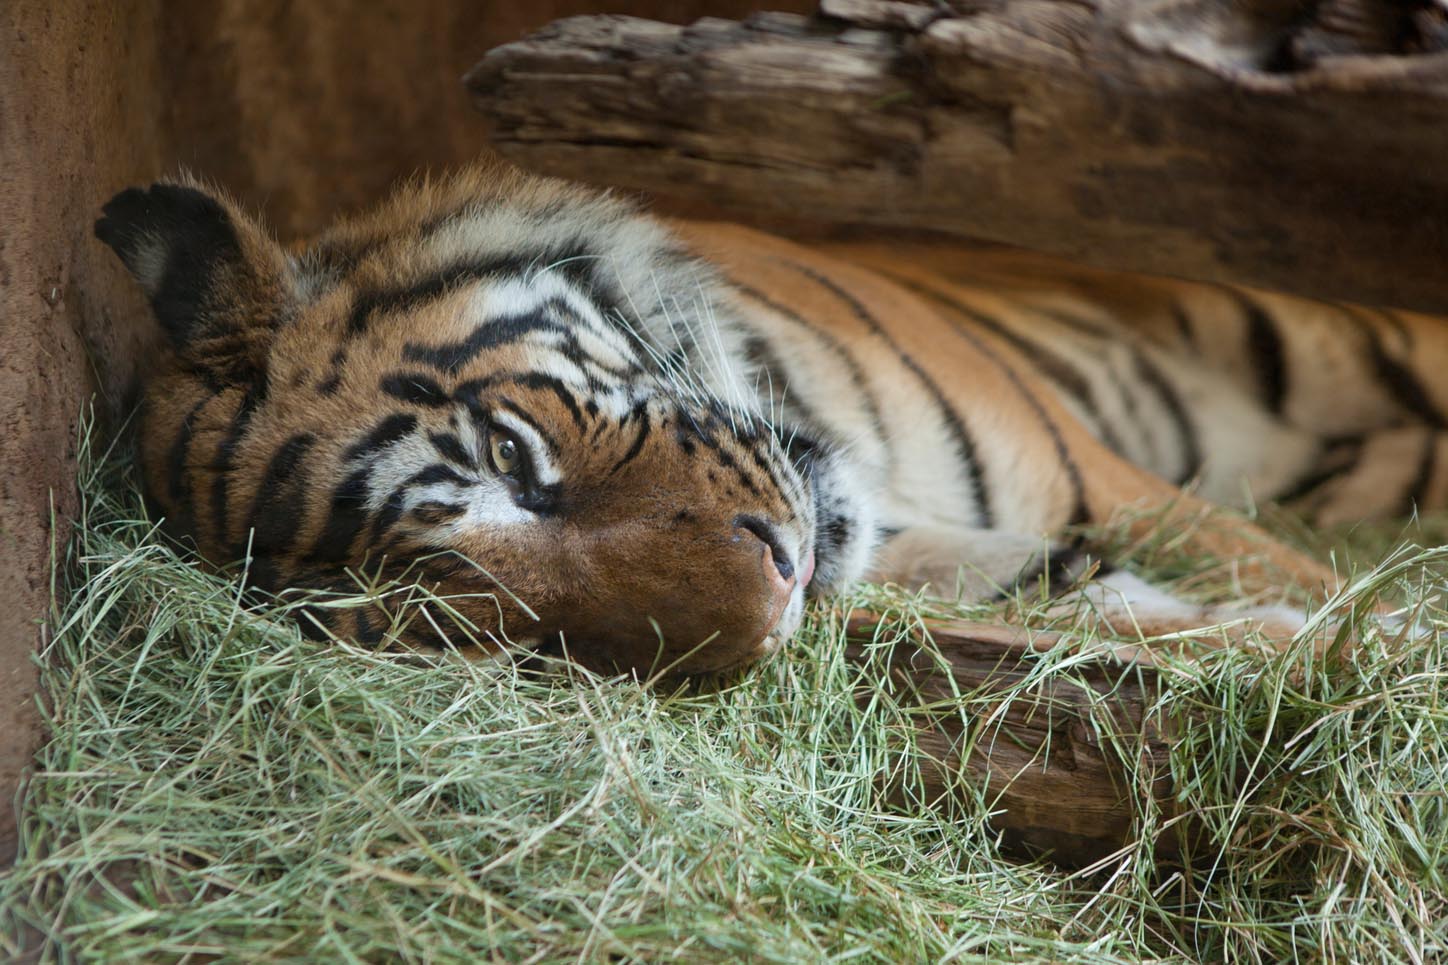 Tiger Habitat at the San Diego Zoo